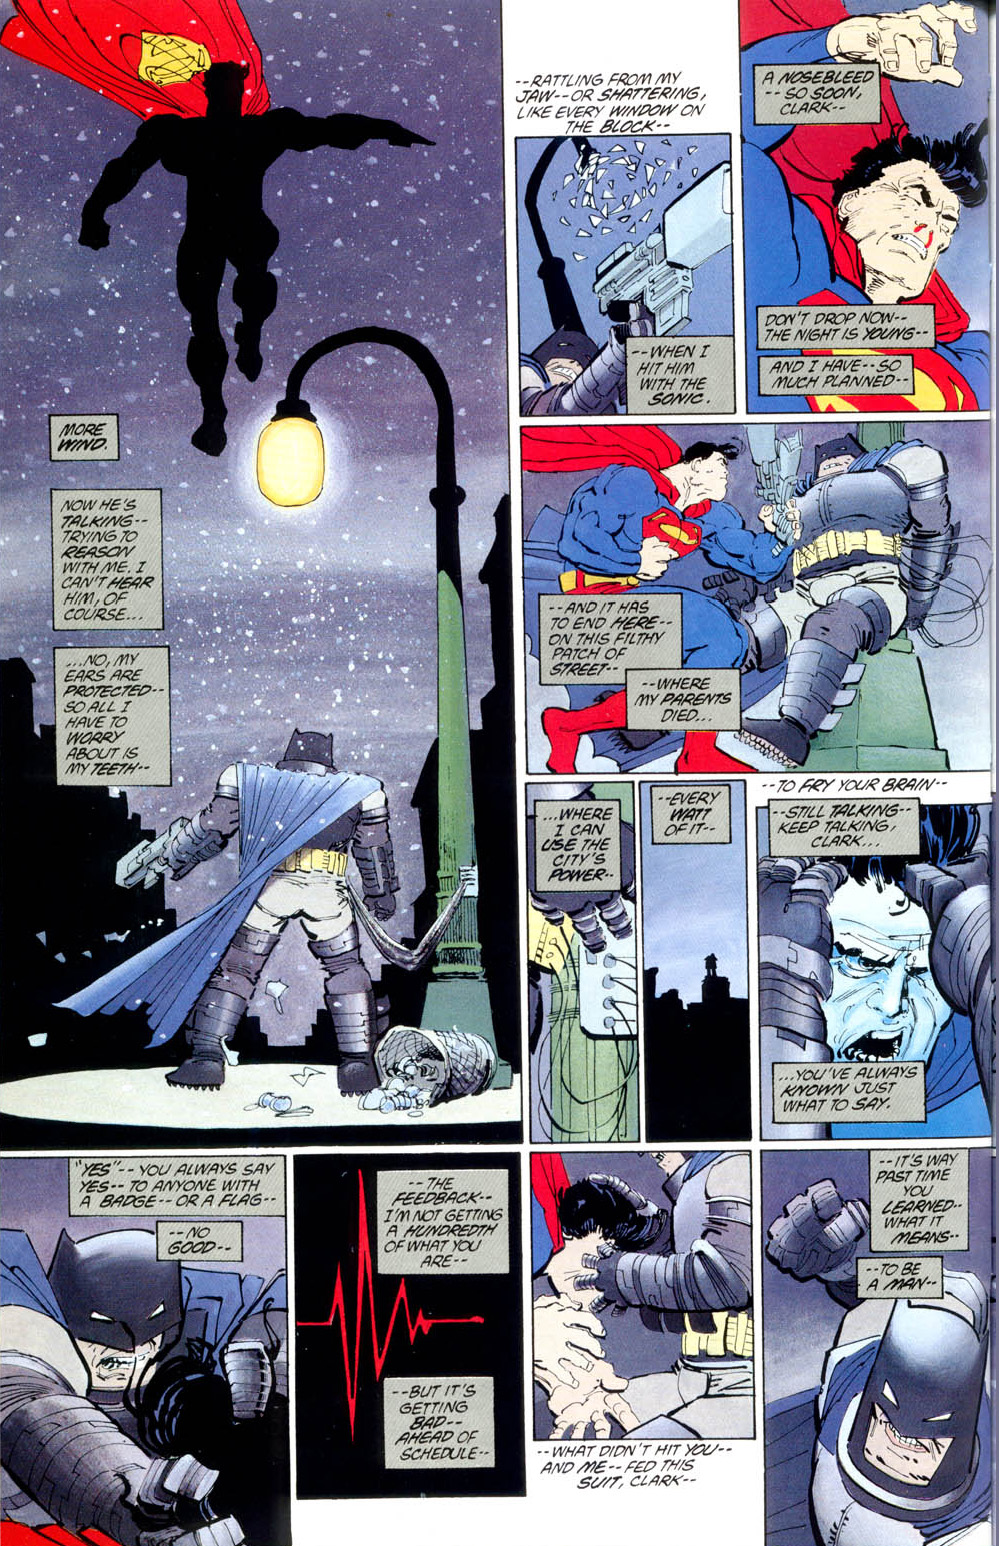 batman-vs-superman-the-dark-knight-returns-11